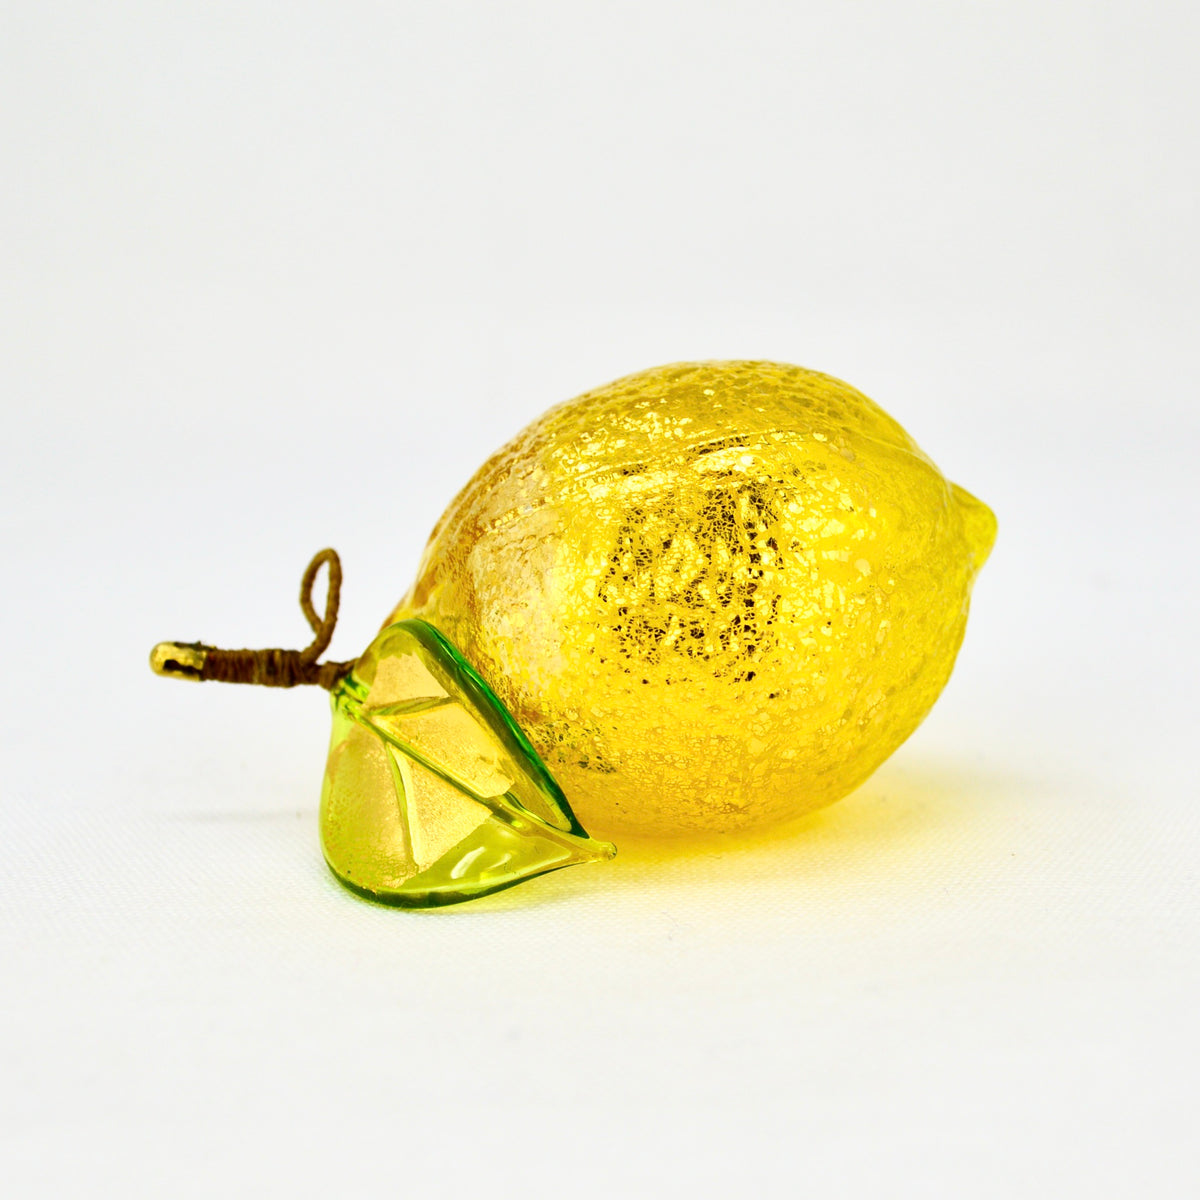 Murano Glass Lemon Figurine, Hanging Ornament, Hand Blown in Italy - My Italian Decor